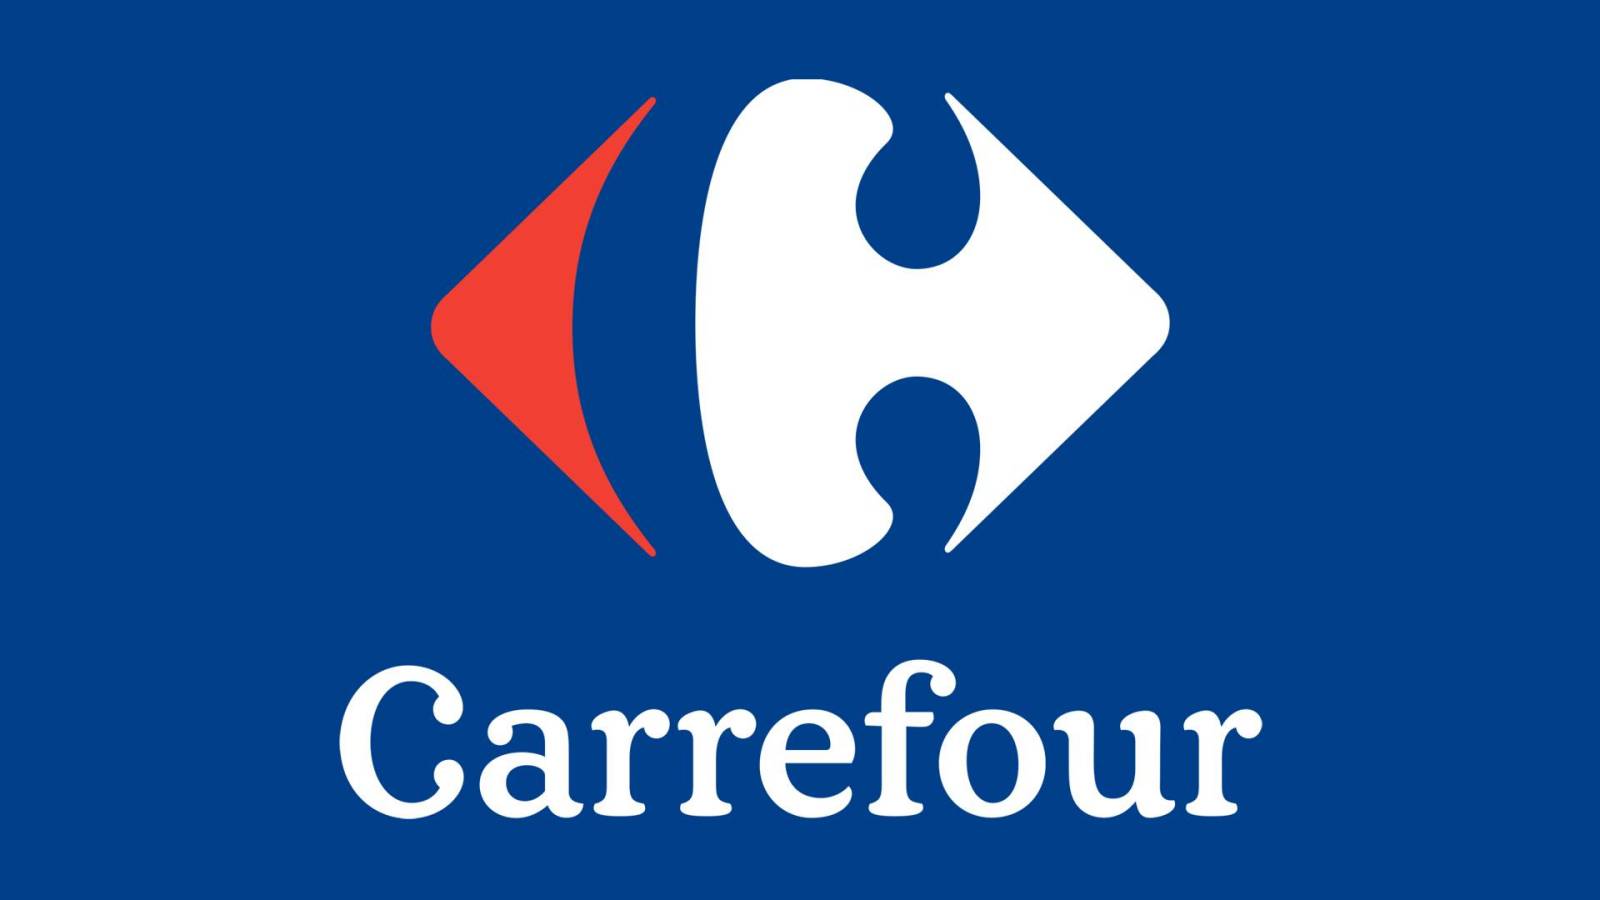 Carrefour Anunt OFICIAL Intampla Toate Magazinele